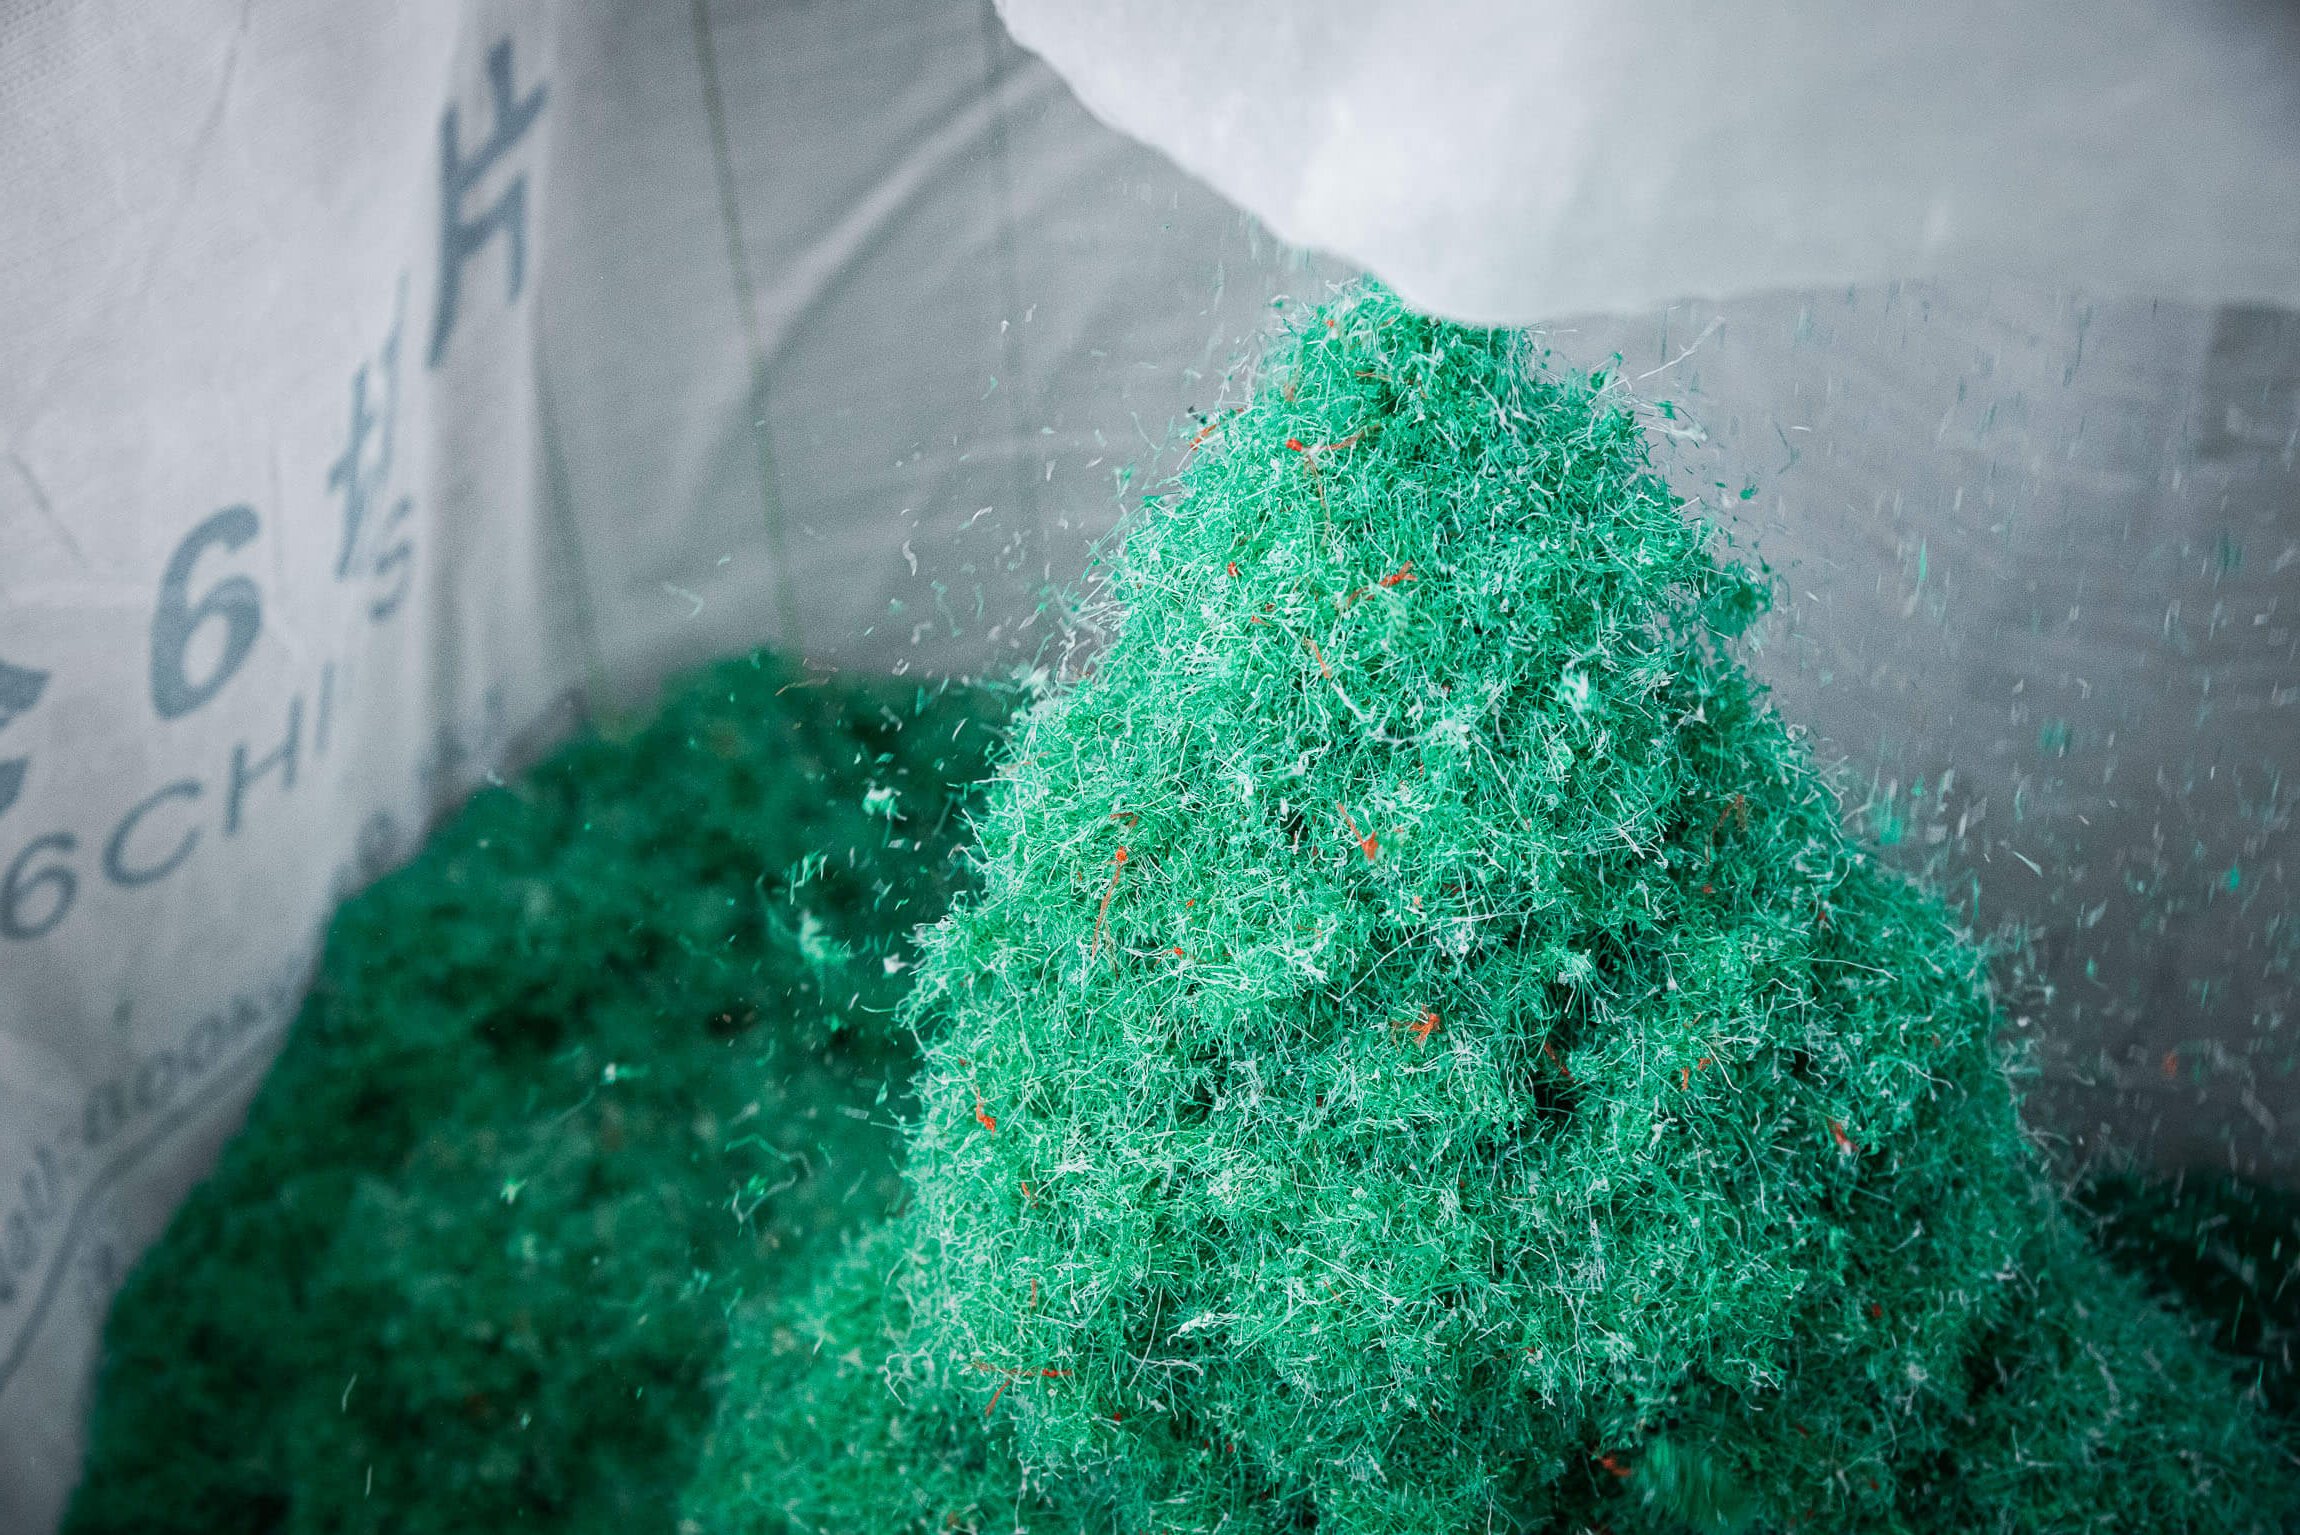 Green shredded fishing nets in a big bag